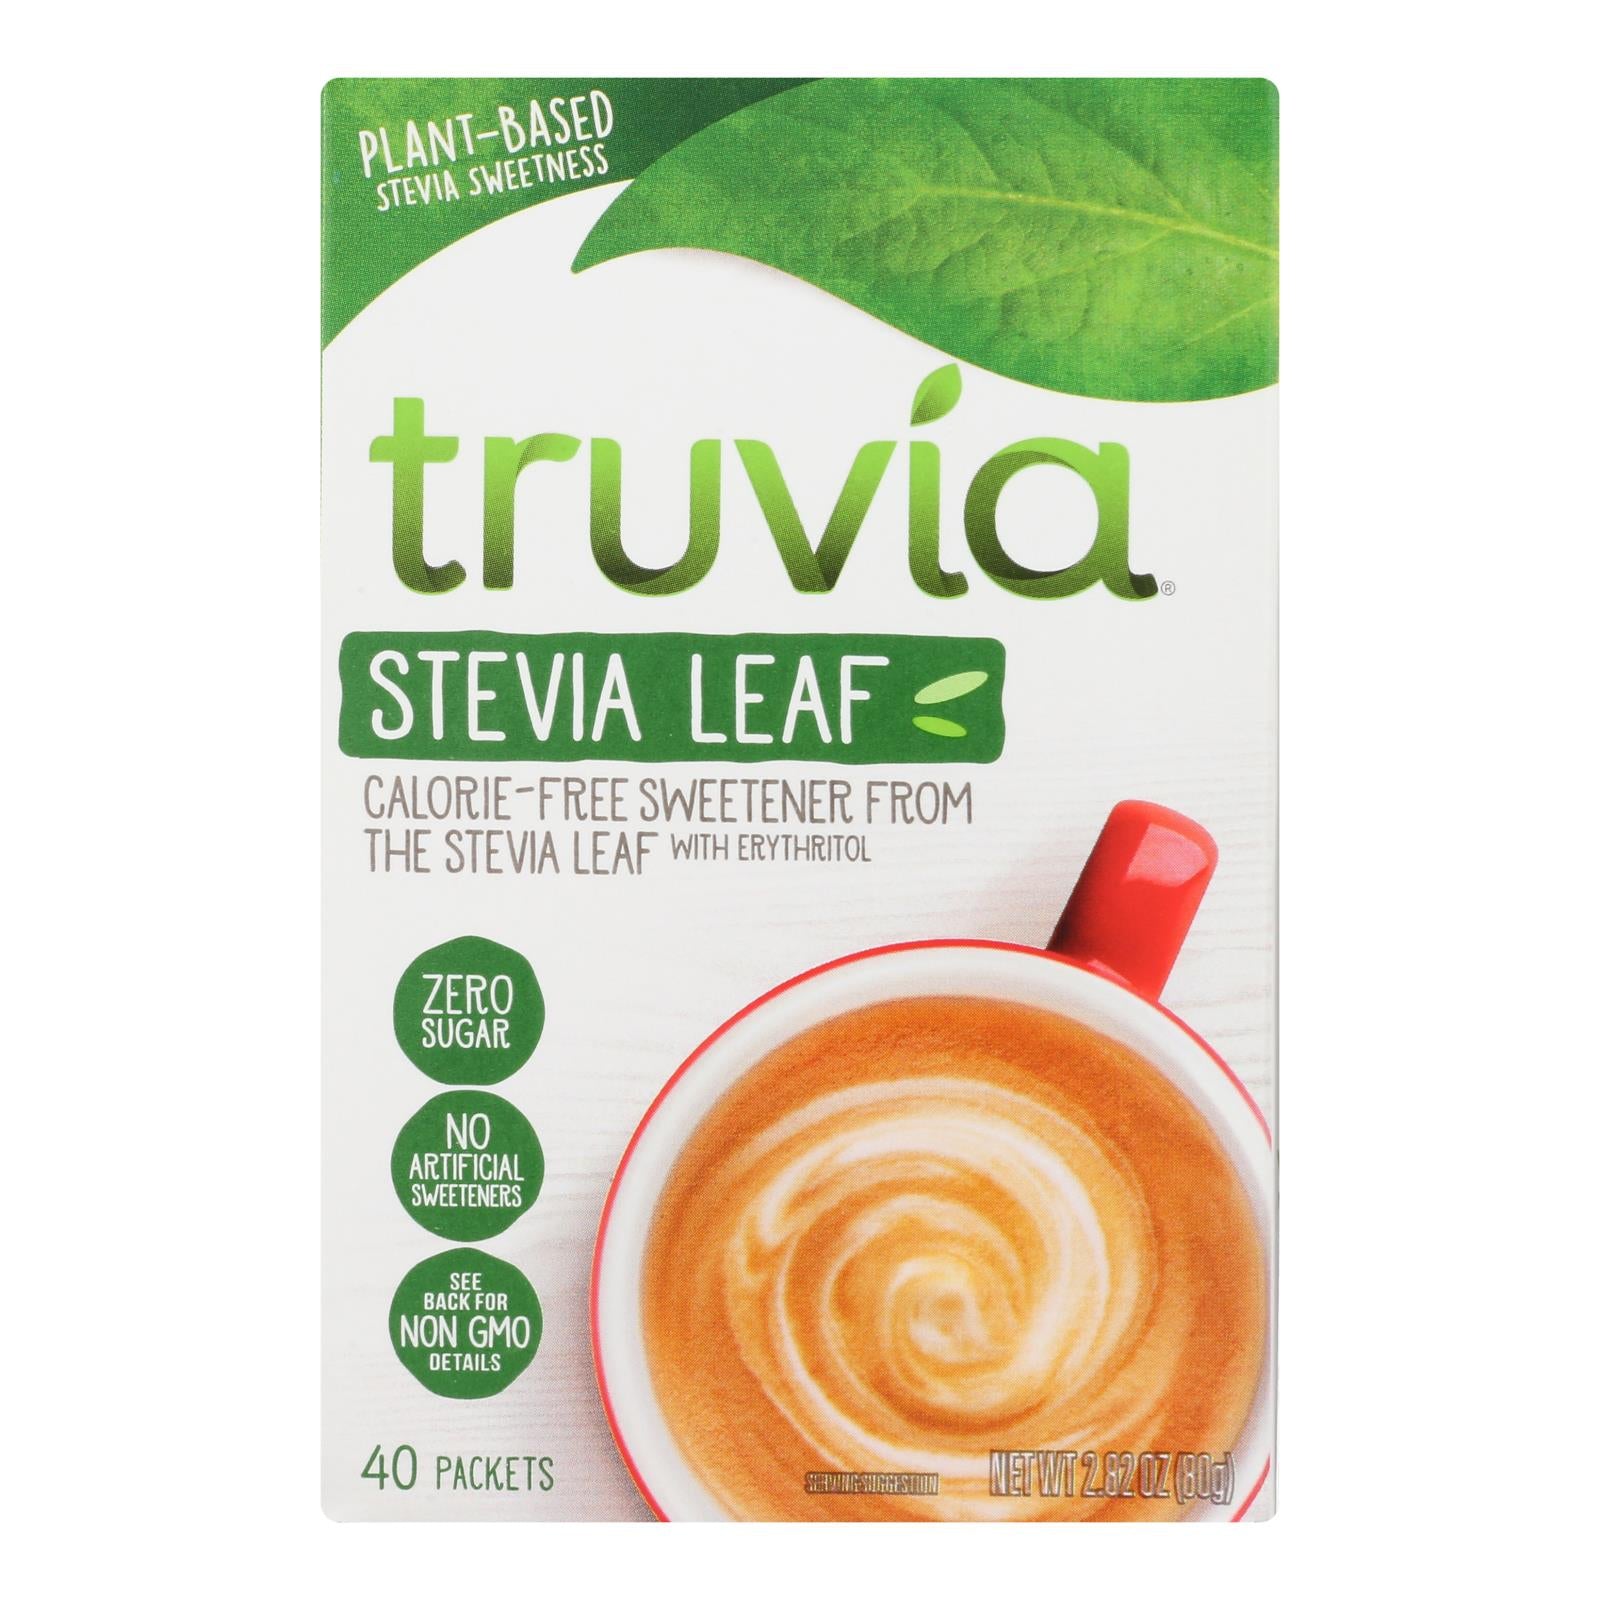 Truvia - Sweetener Natural - Case Of 12 - 40 Ct